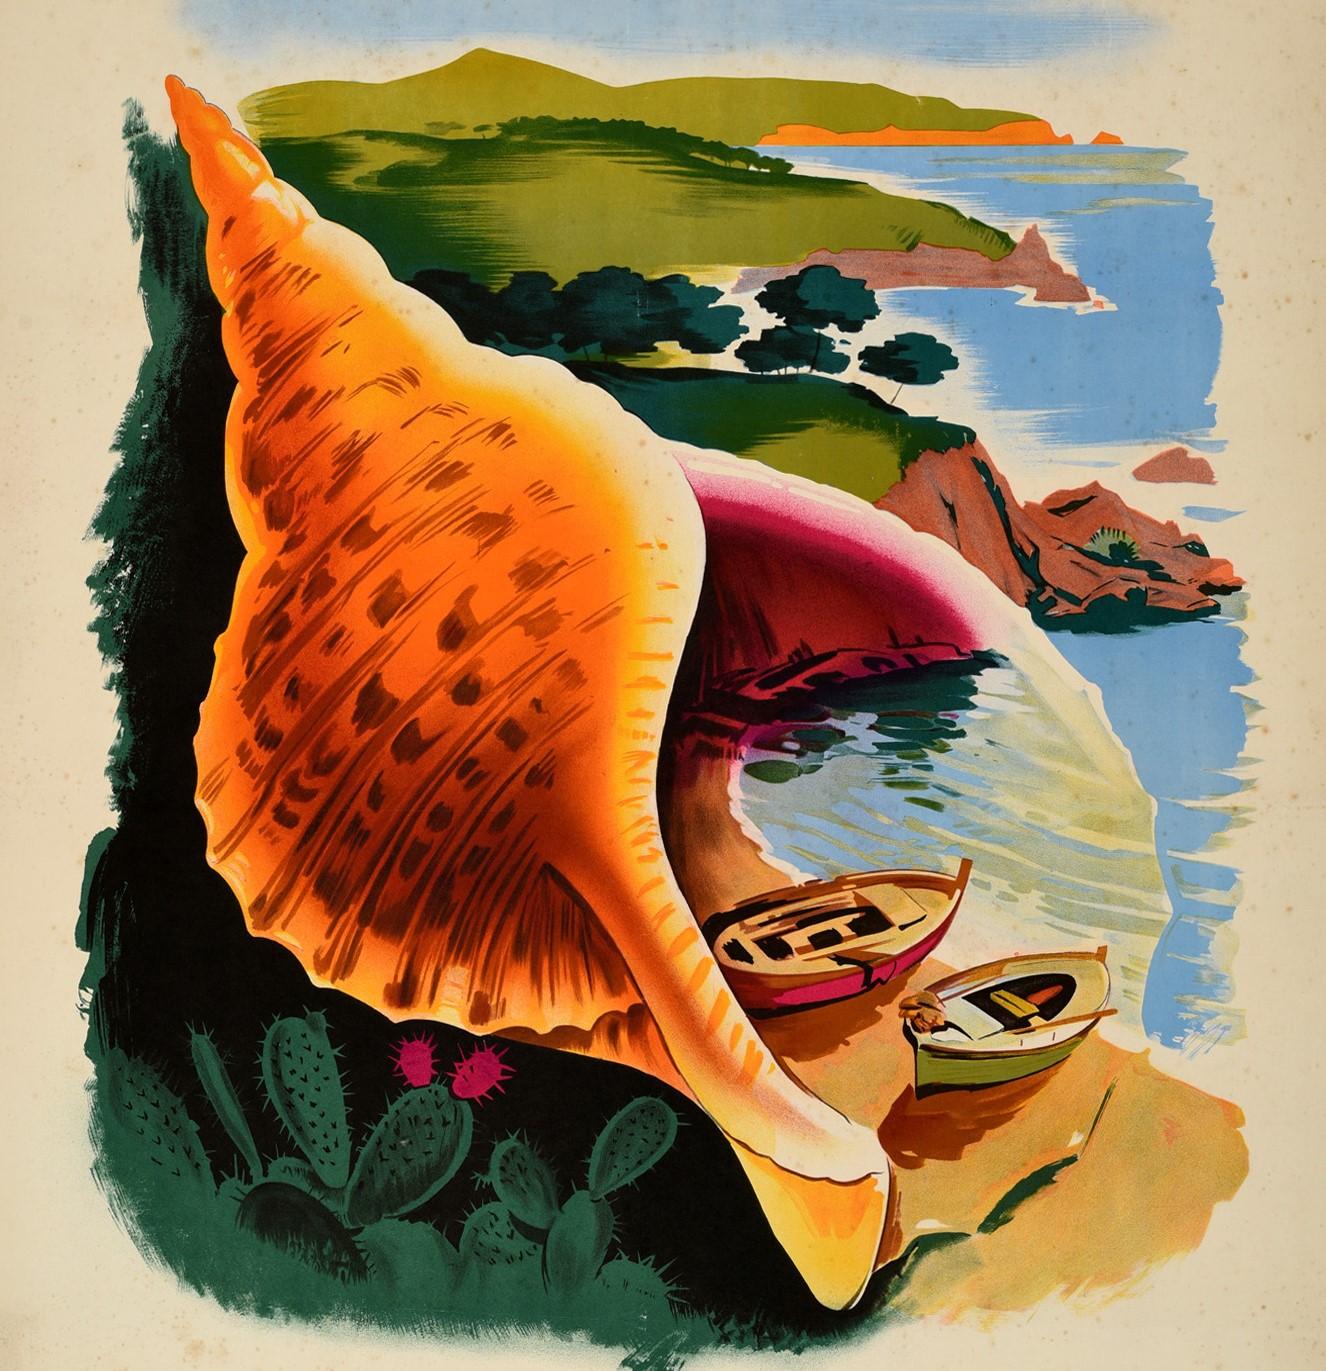 Spanish Original Vintage Travel Poster For Gerona Espana Mediterranean Costa Brava Spain